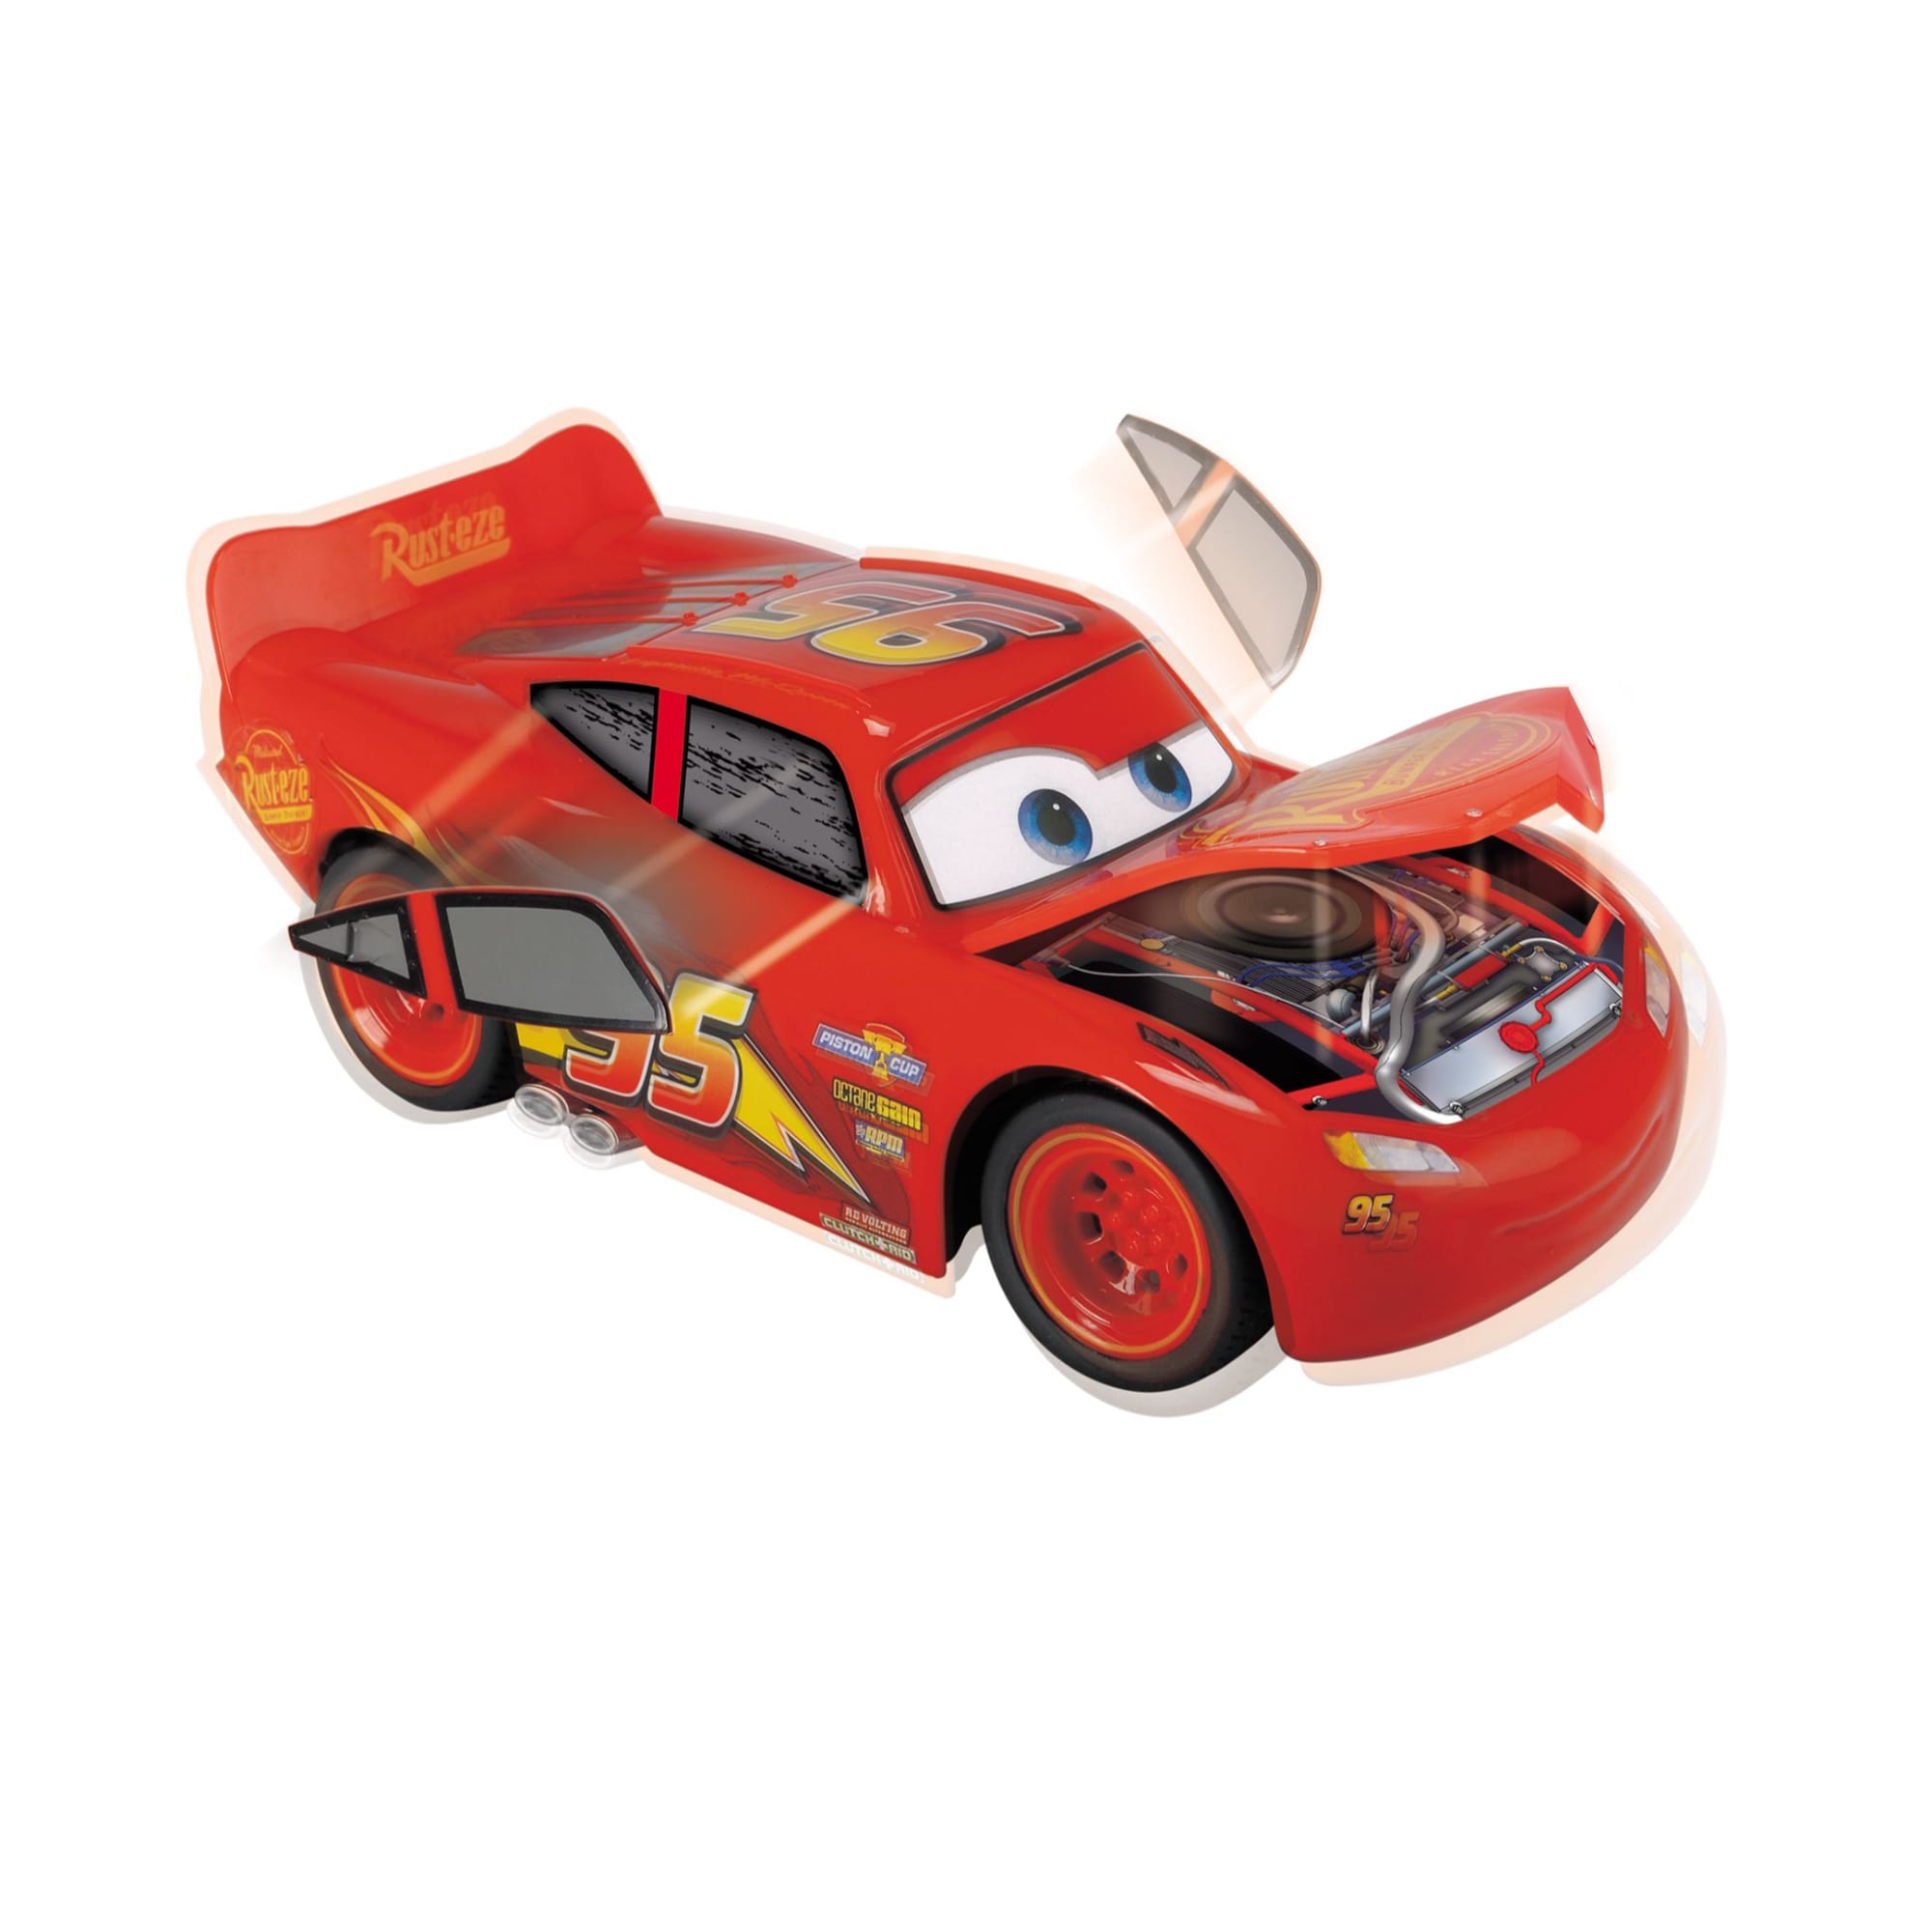 Jada Toys Disney Pixar Cars Remote-Control Car for Kids, 2-Channel